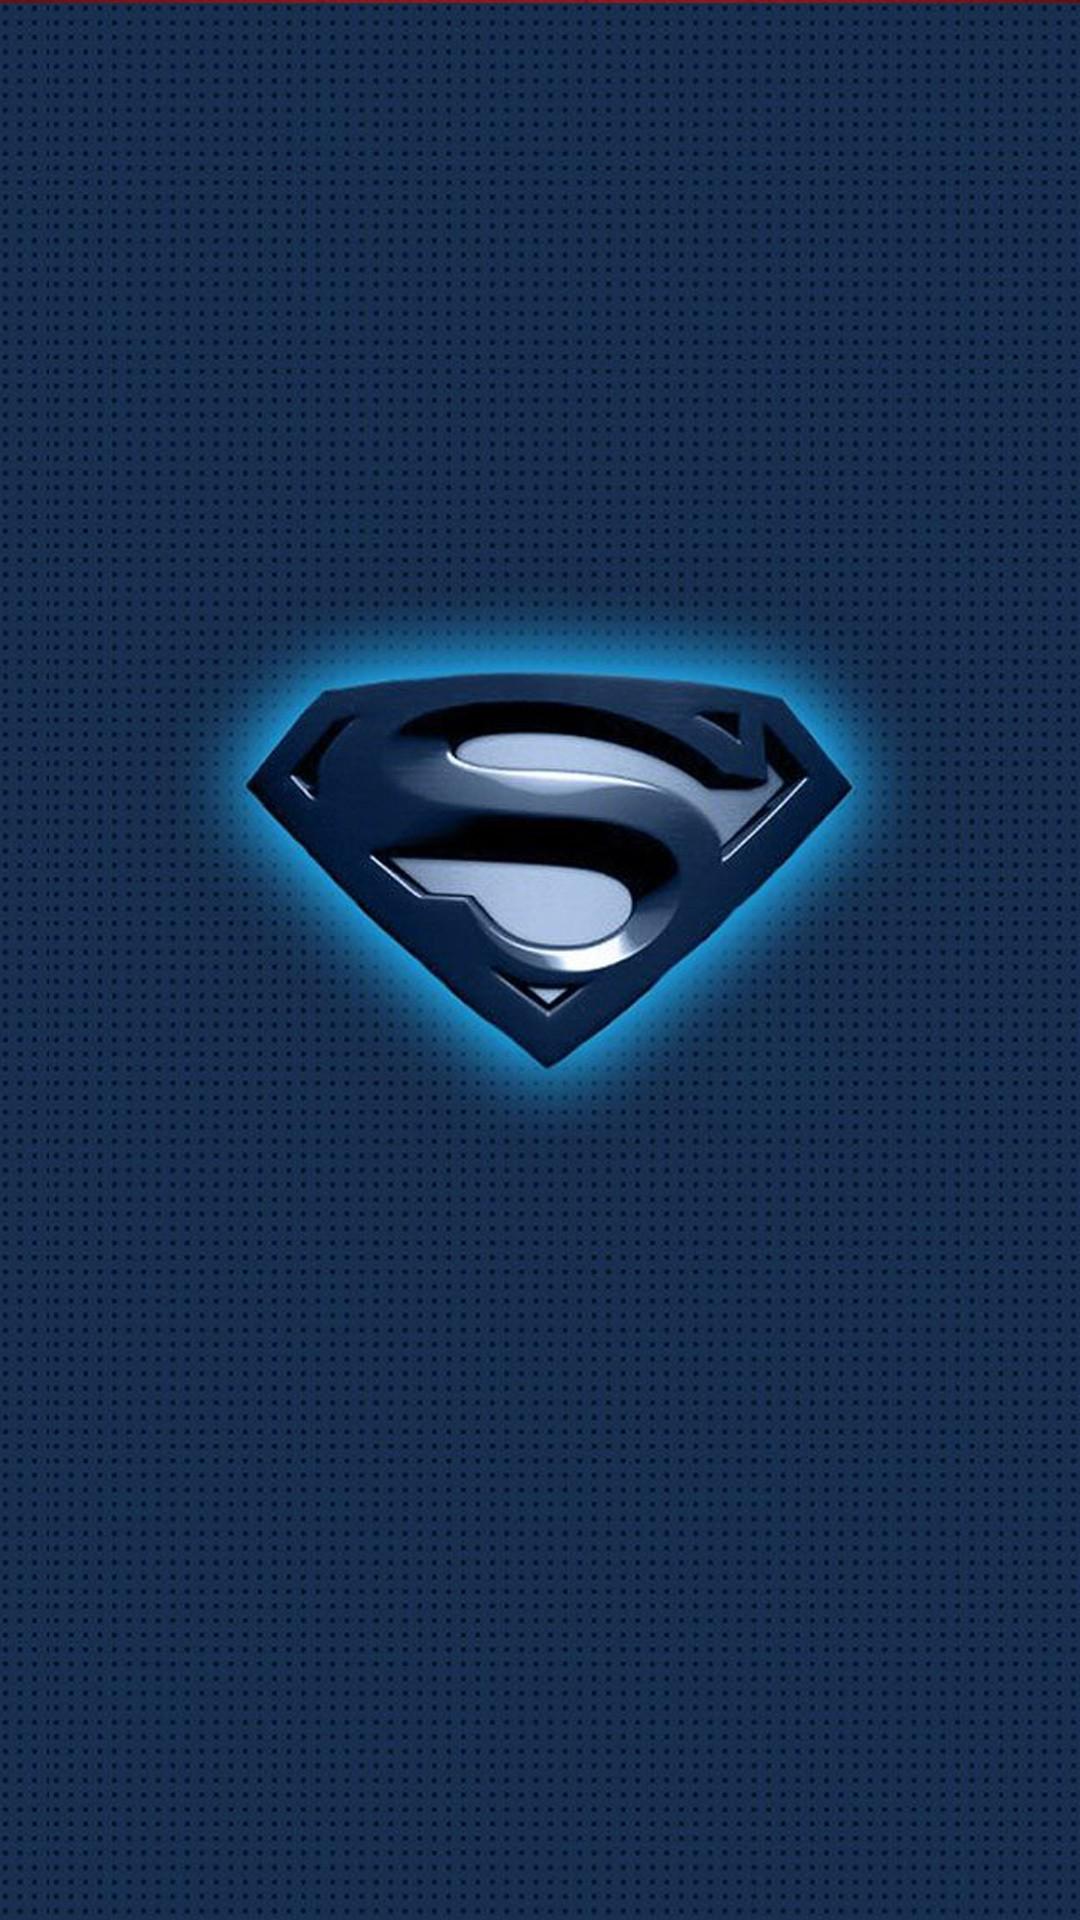 Superhero Wallpaper HDsetaswall.com